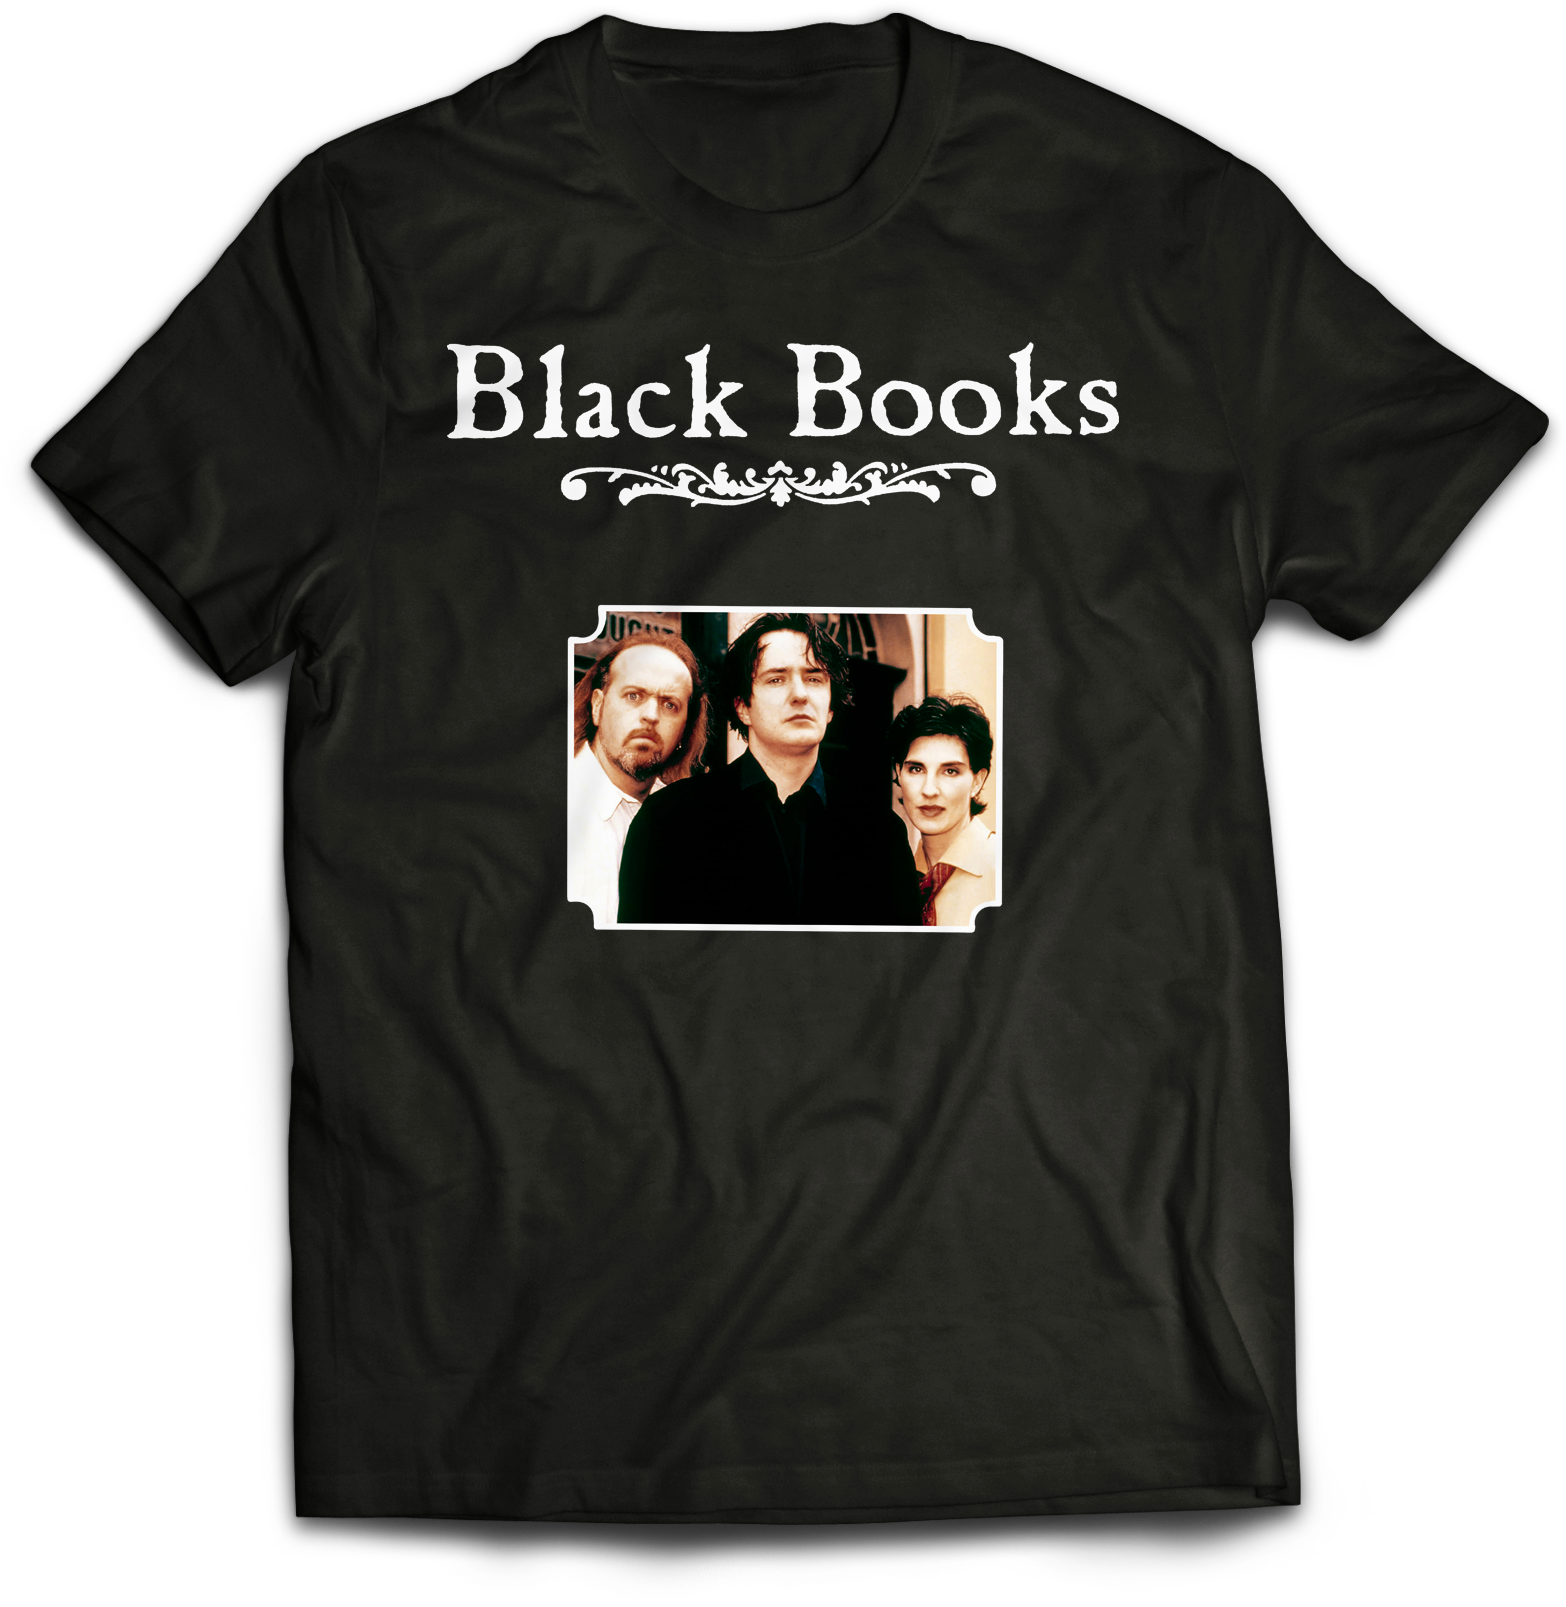 BLACK BOOKS: PORTRAIT T-SHIRT